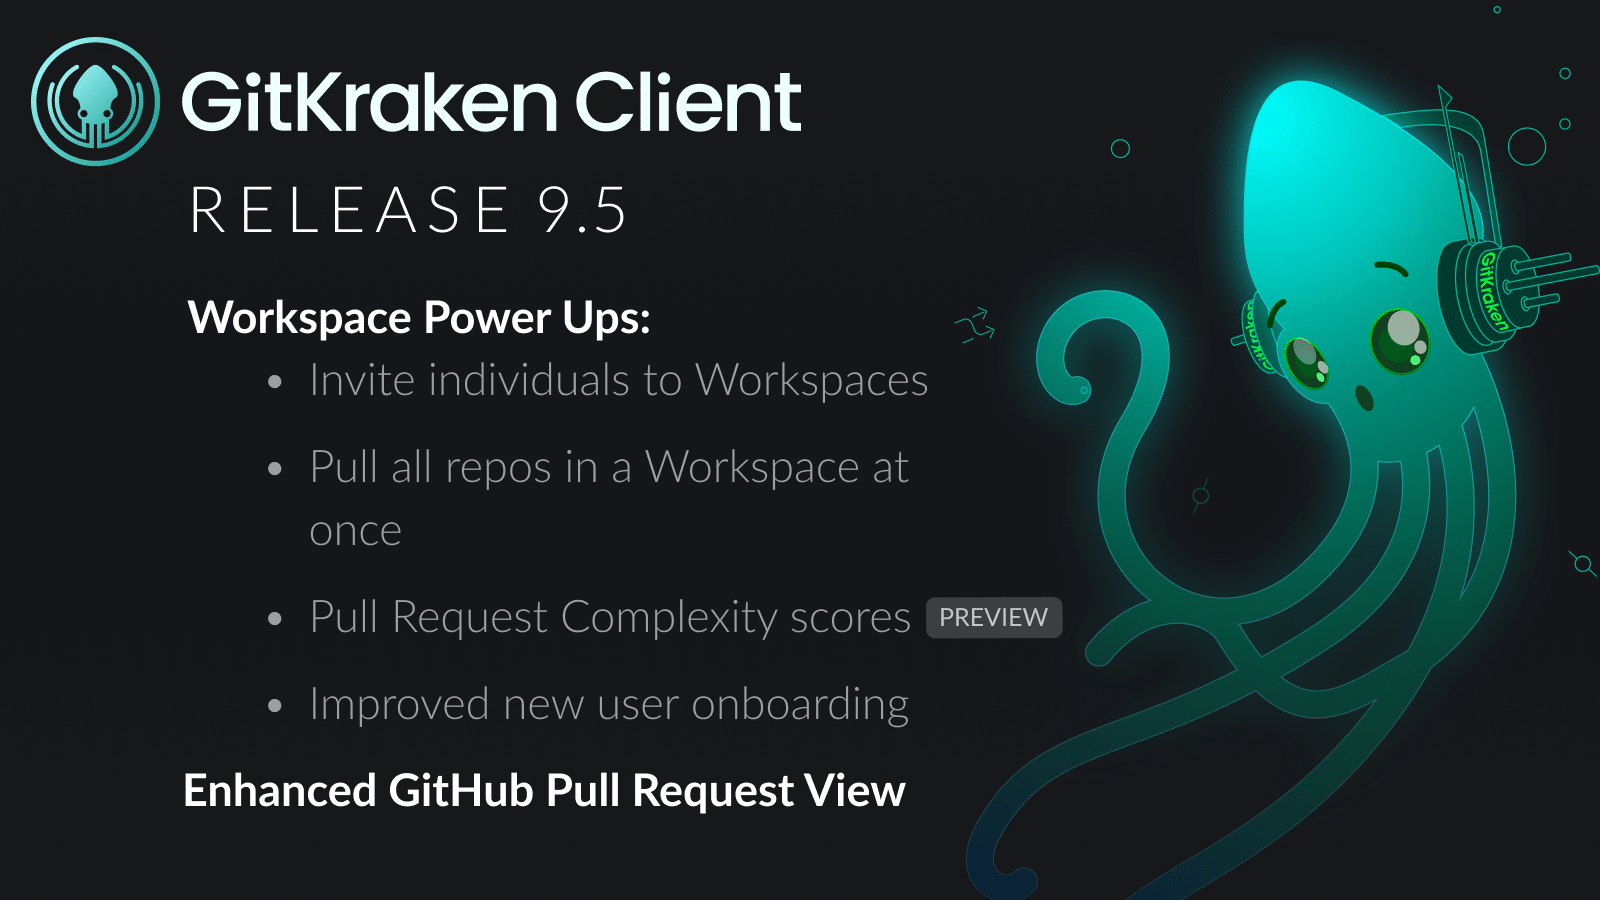 GitKraken Client 9.5